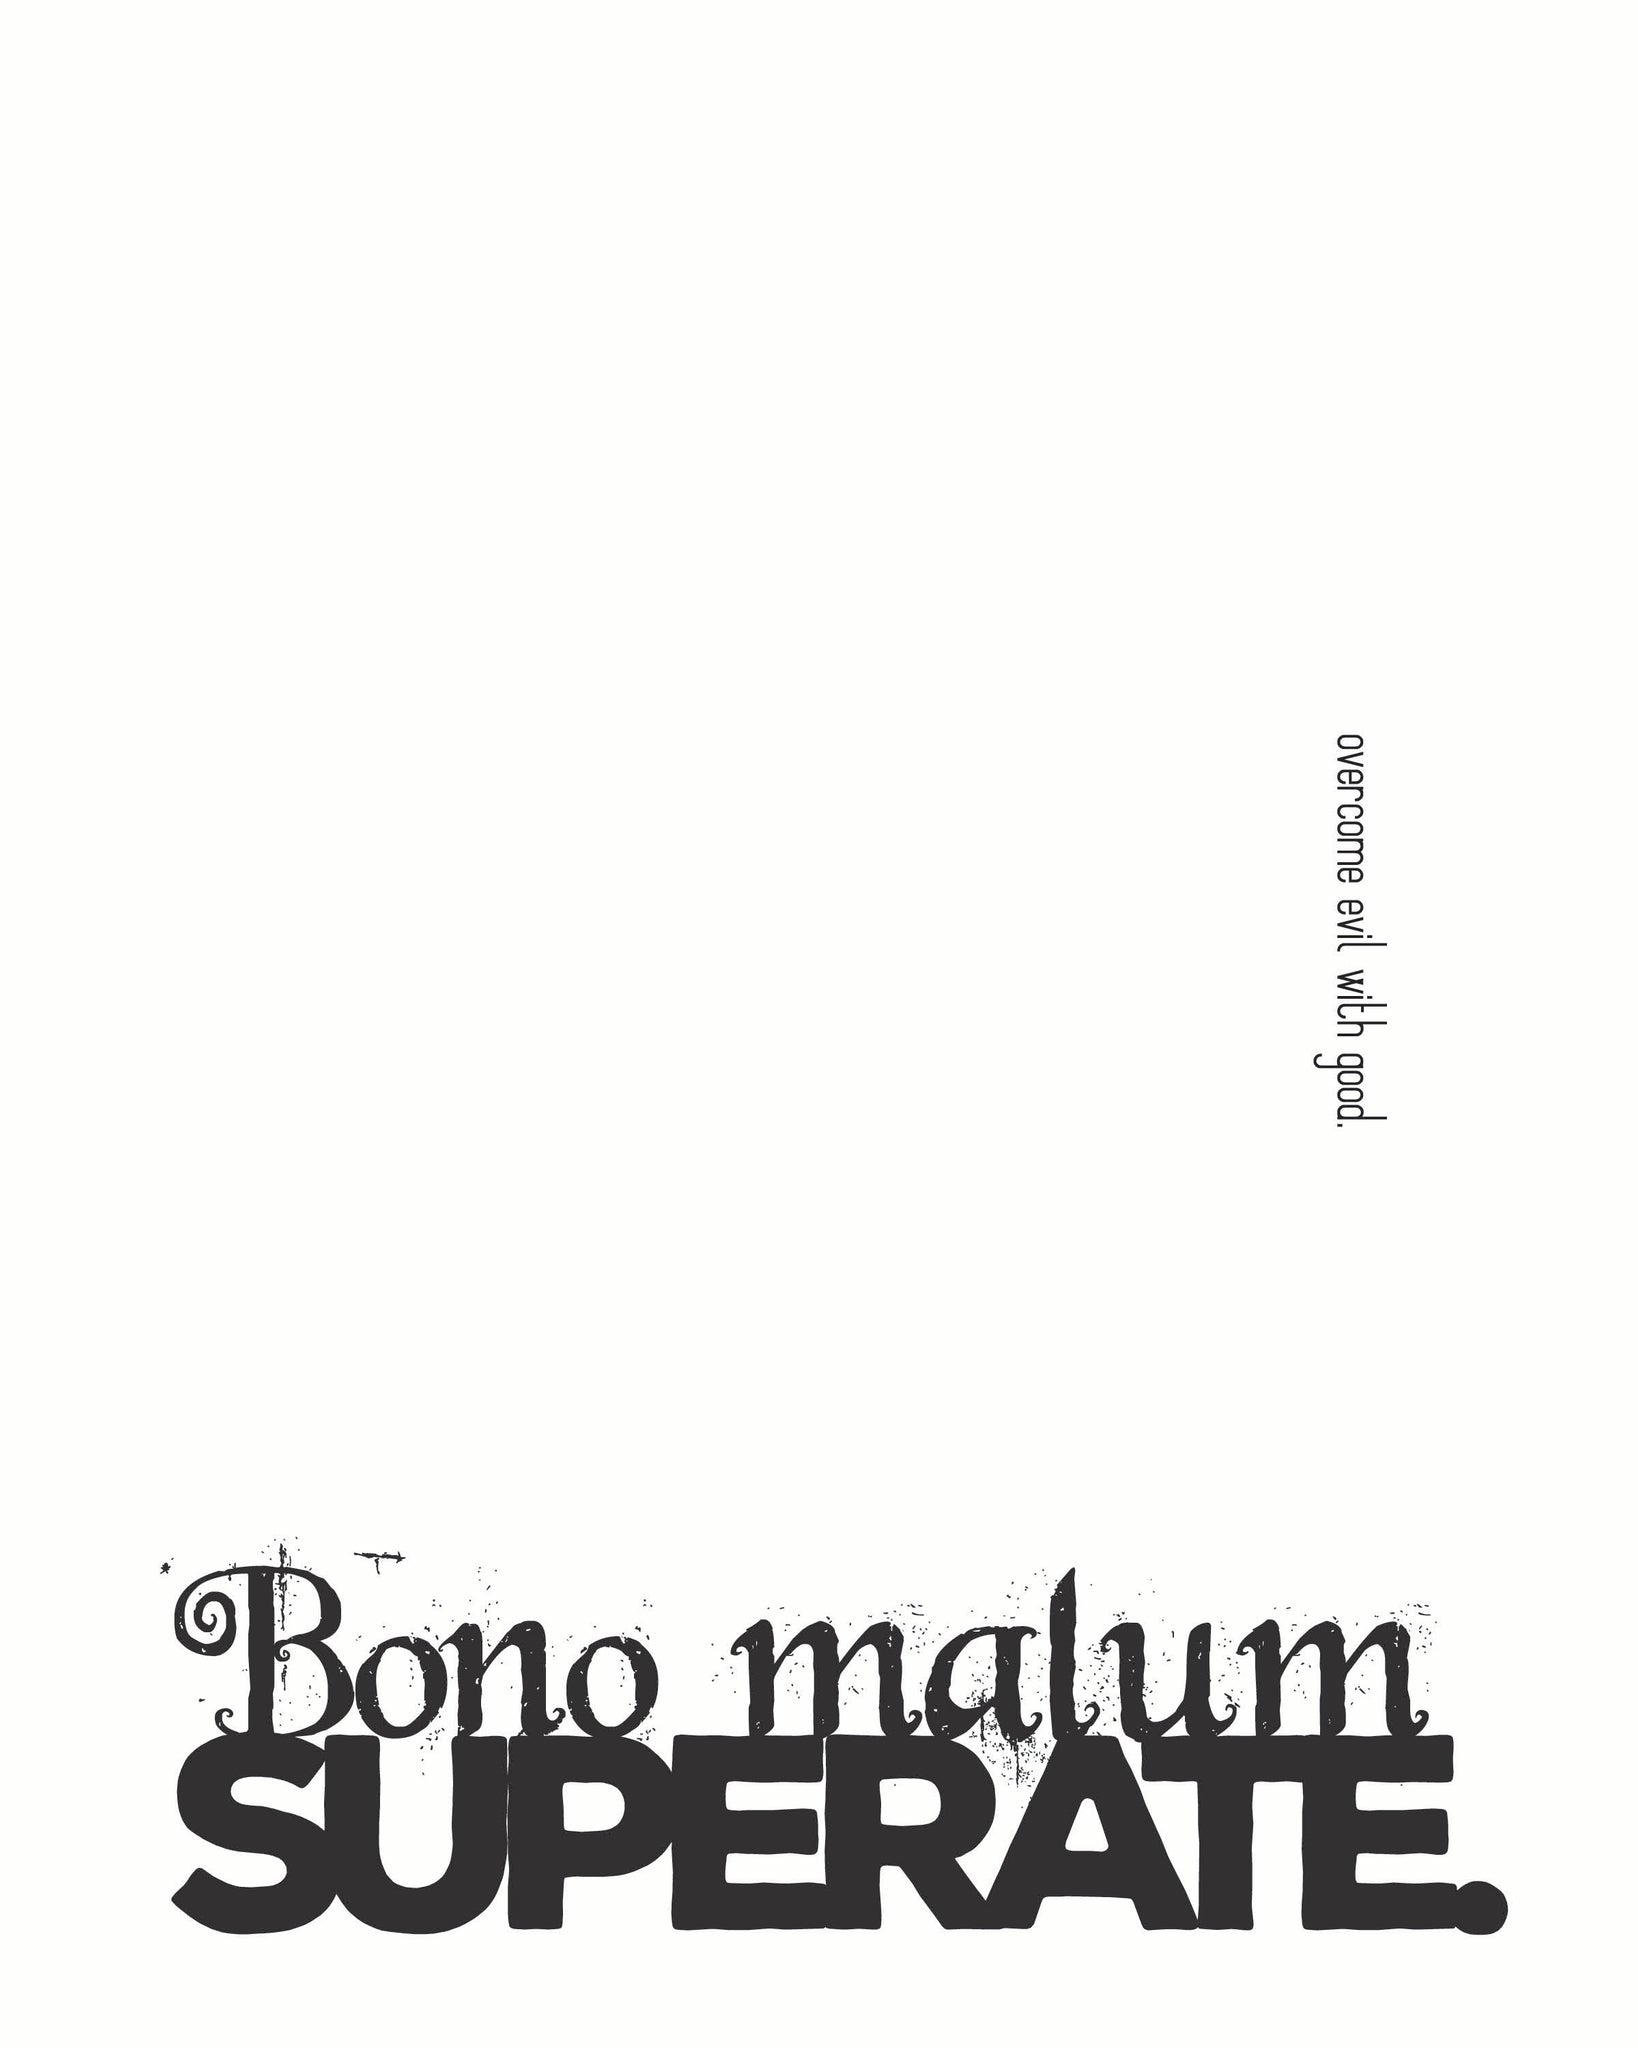 Latin Phrases Poster - Bono Malum Superate (Overcome Evil with Good)  **Digital Download**